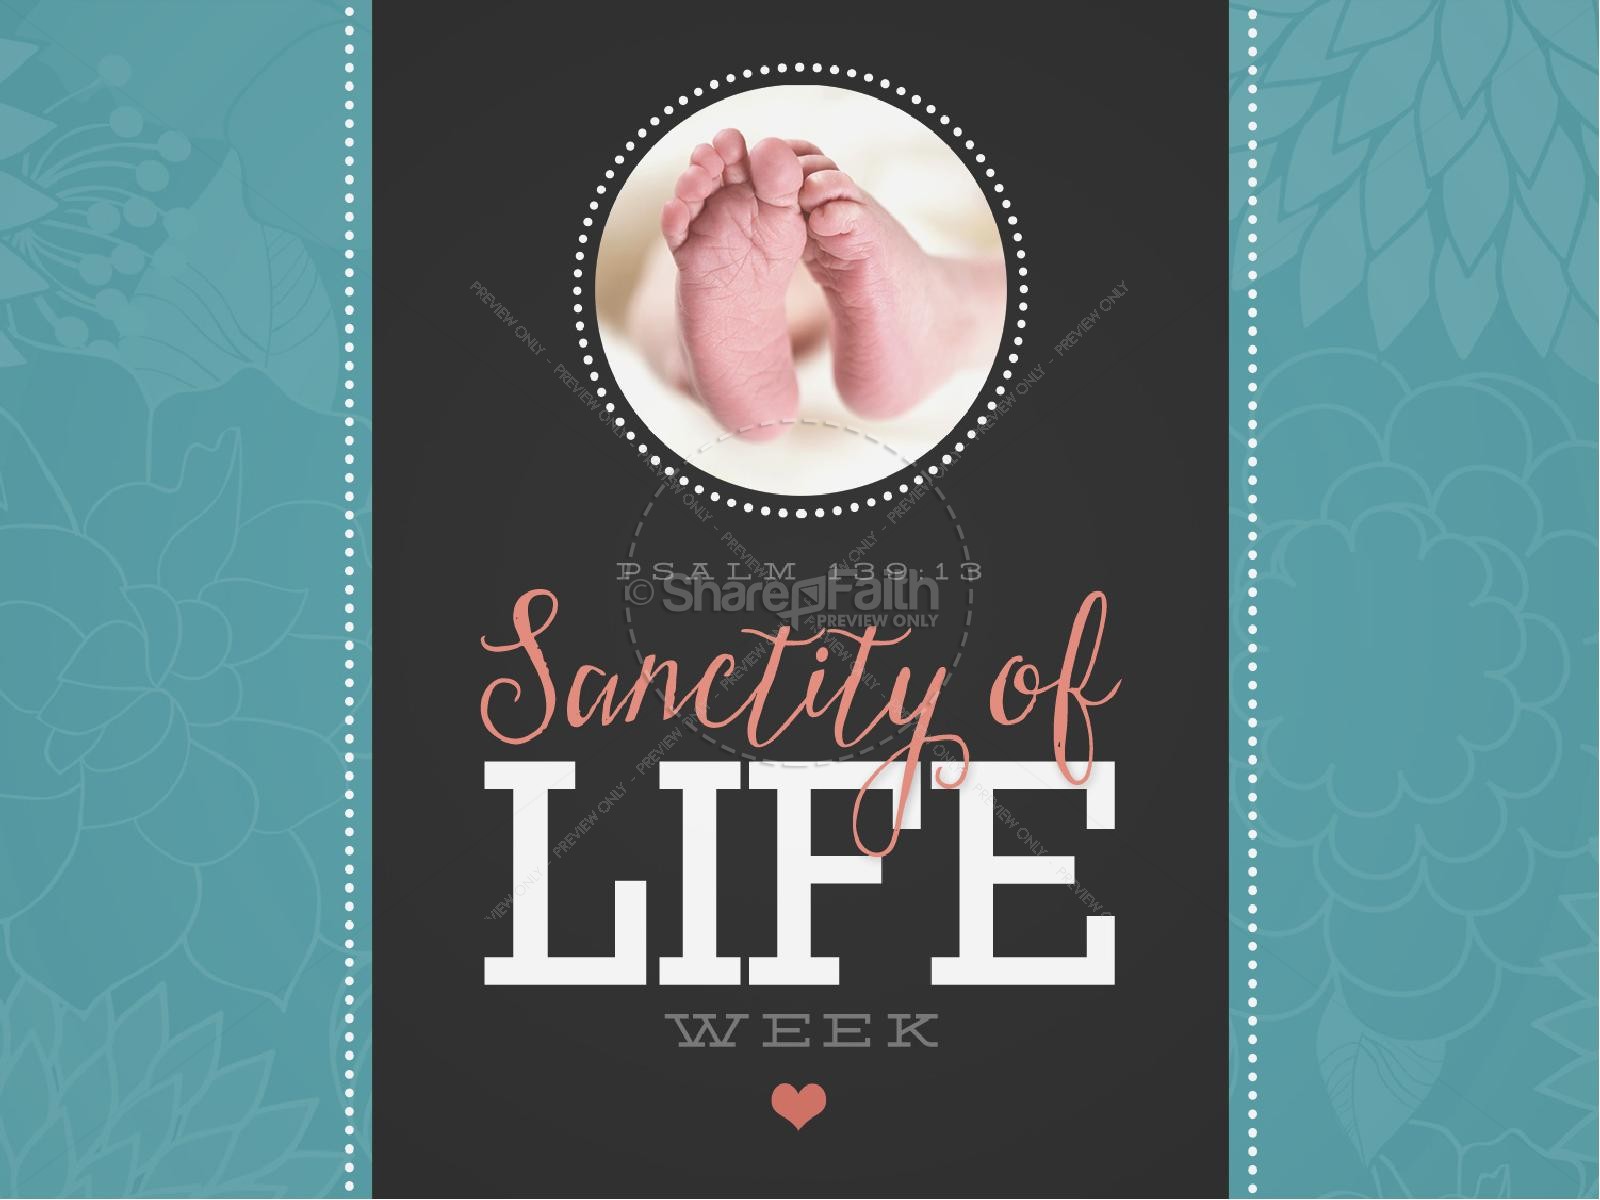 Sanctity of Life Week Christian PowerPoint